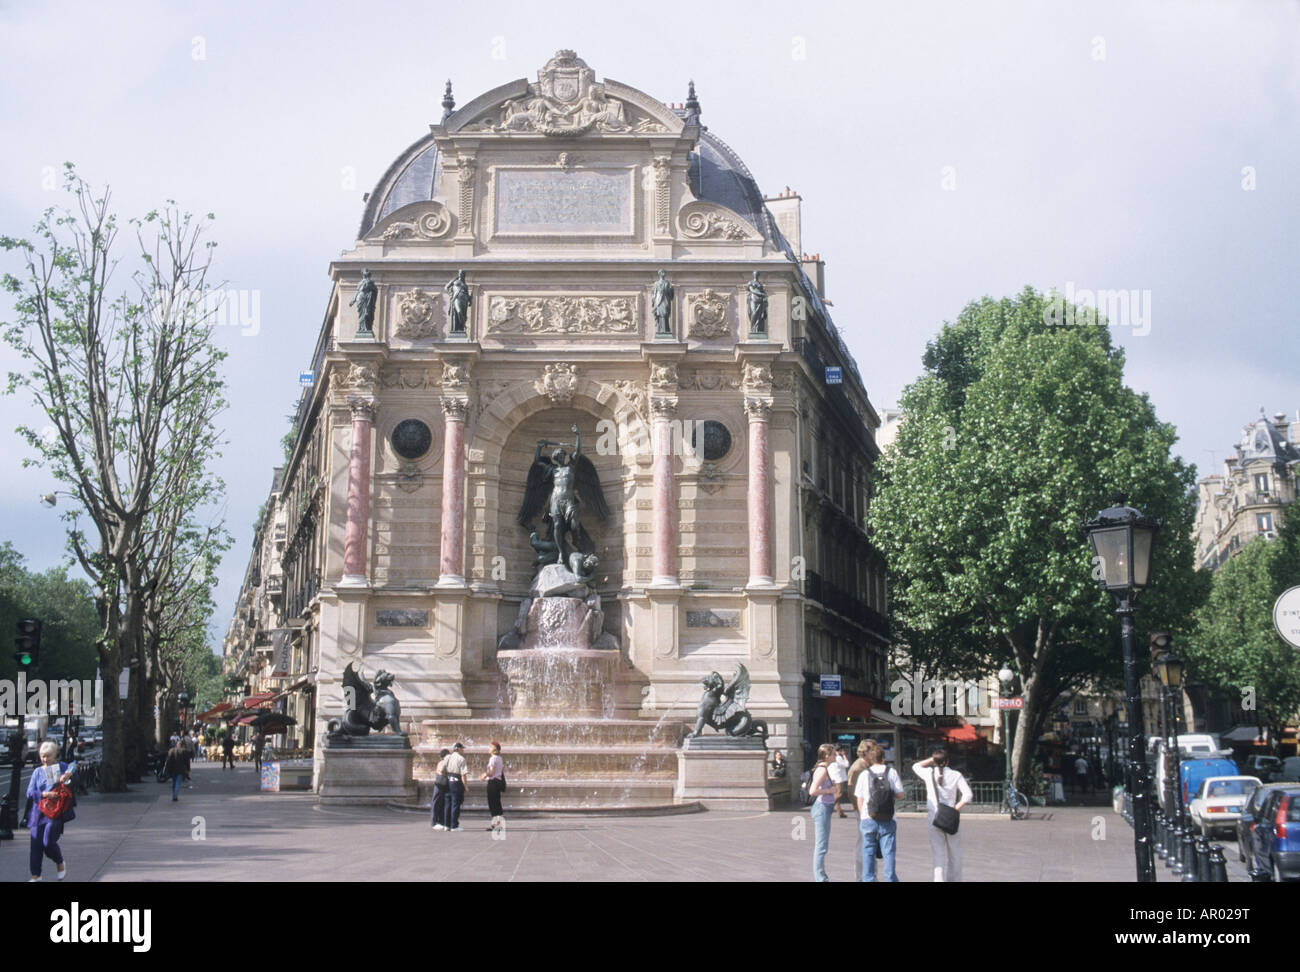 St Michel Plaza Latin Quarter Paris France monument street scene Stock Photo